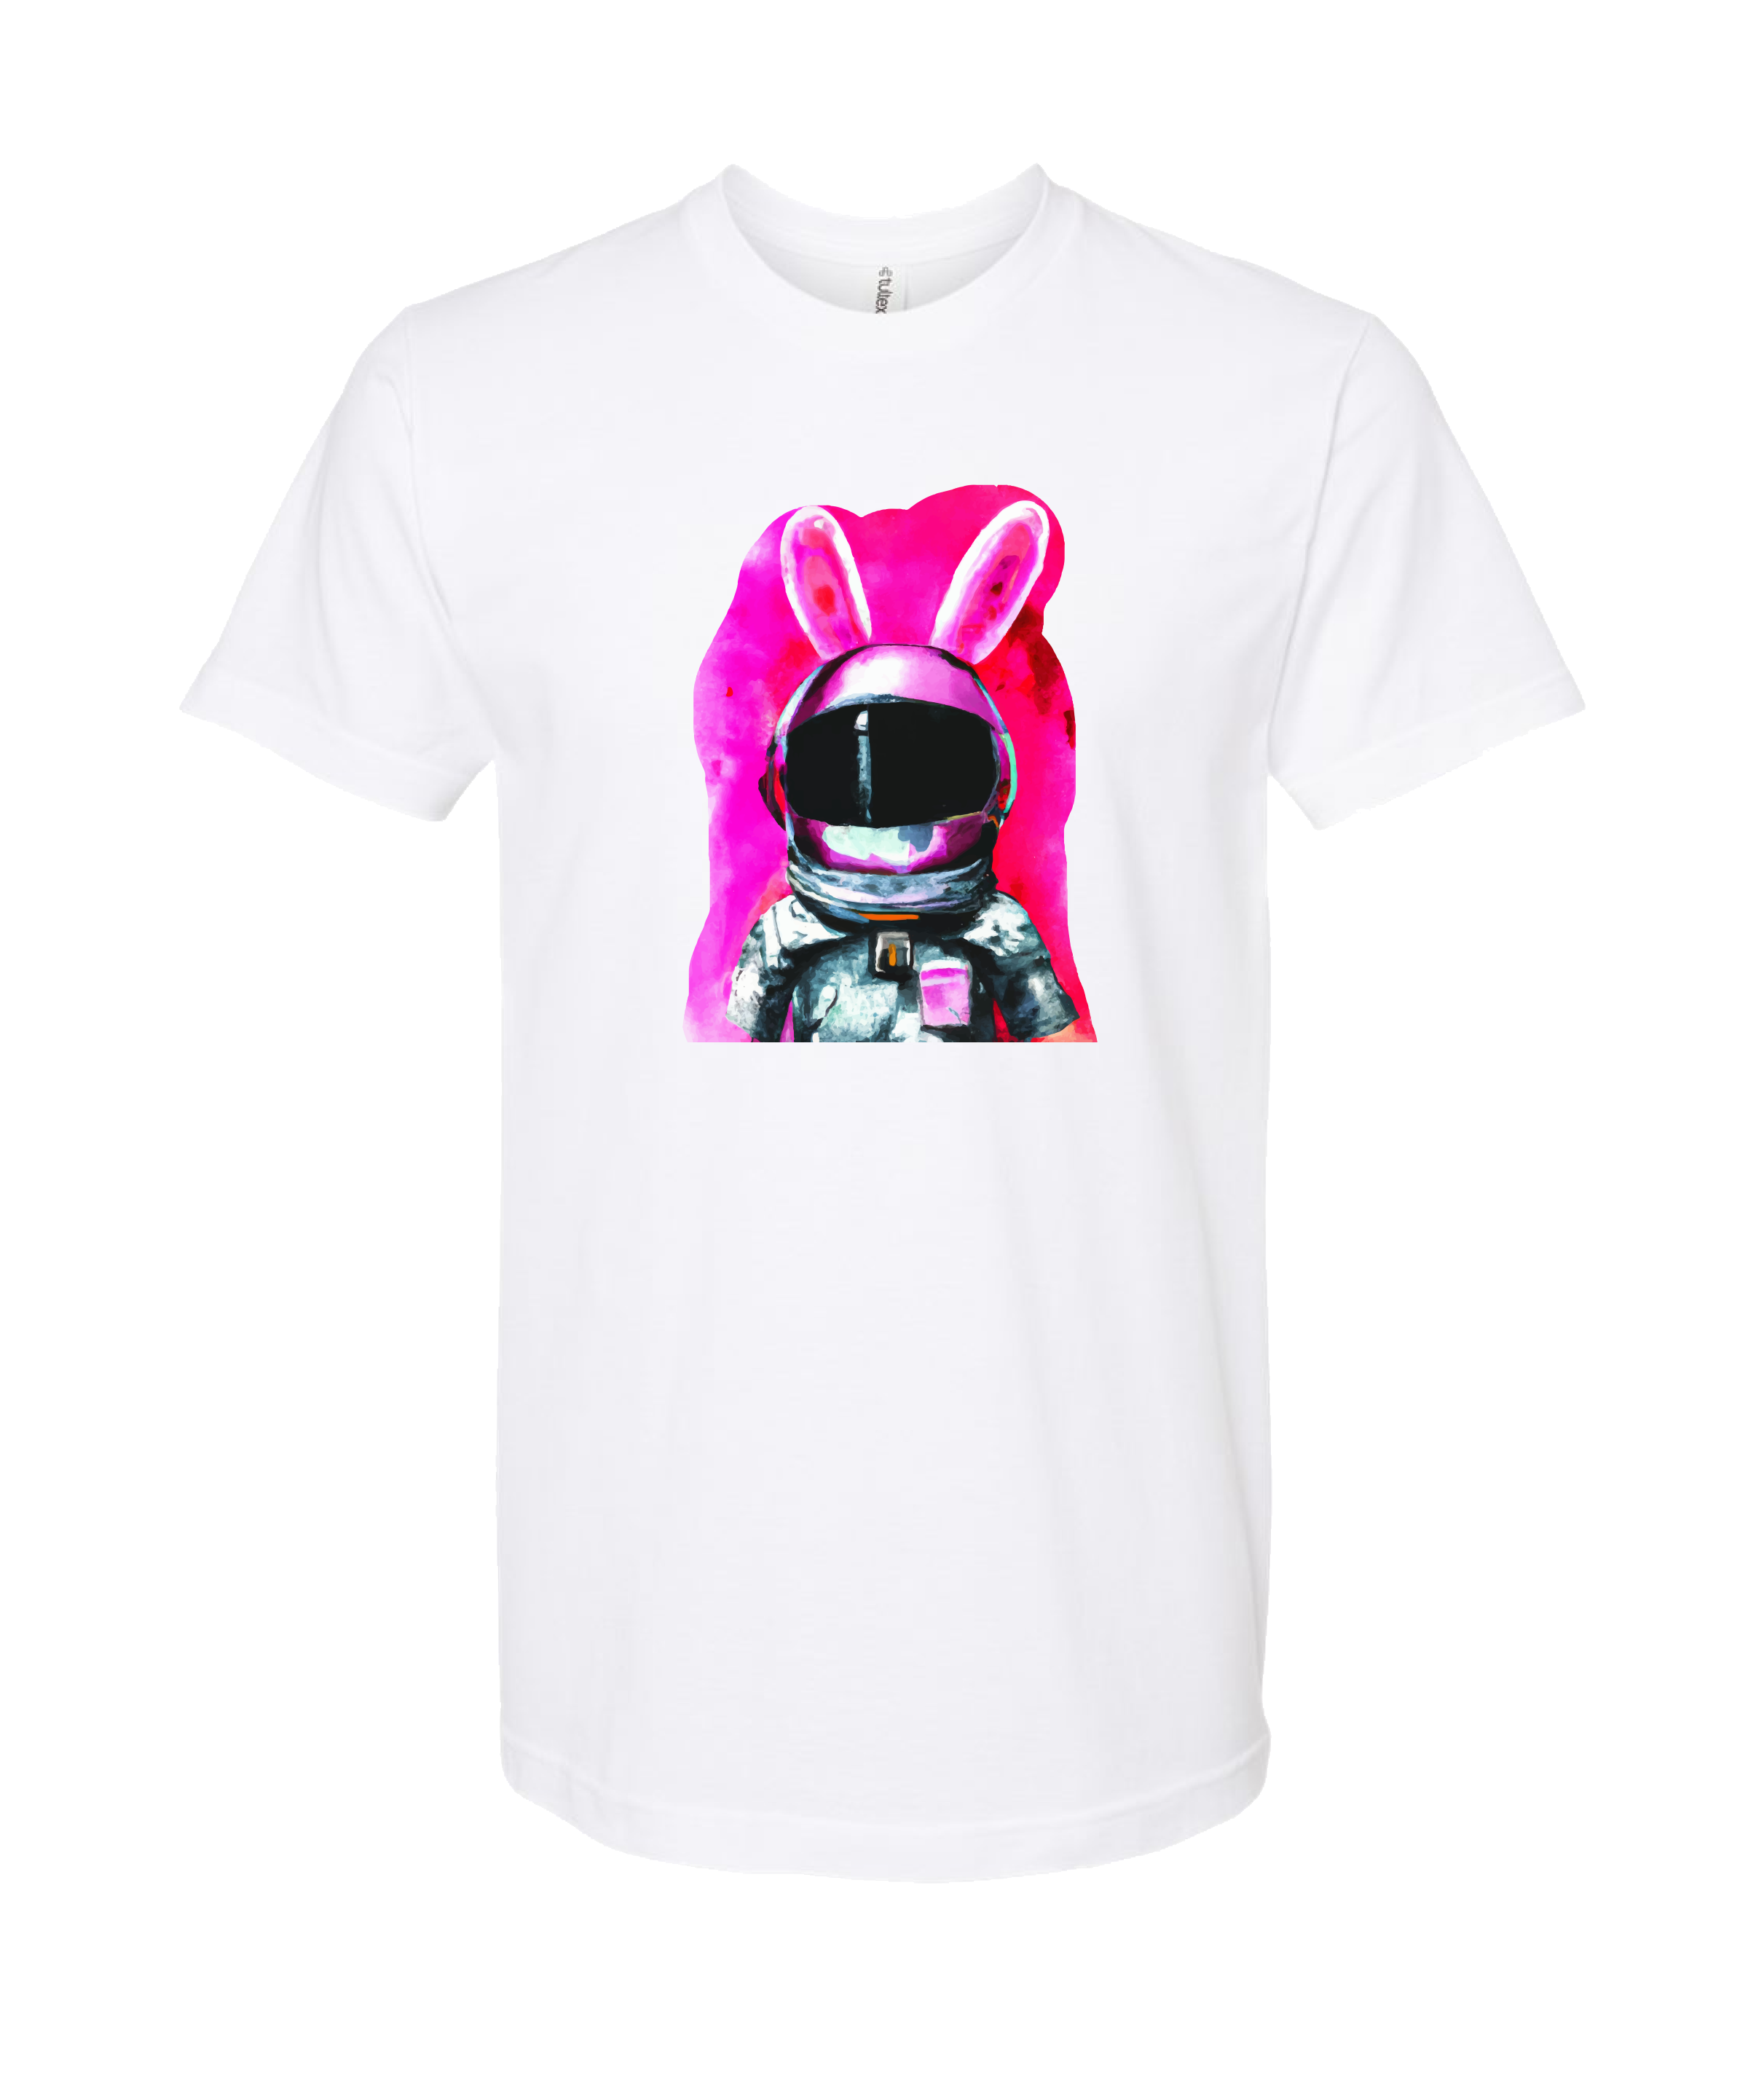 Legendarious Space Rabbit White T Shirt